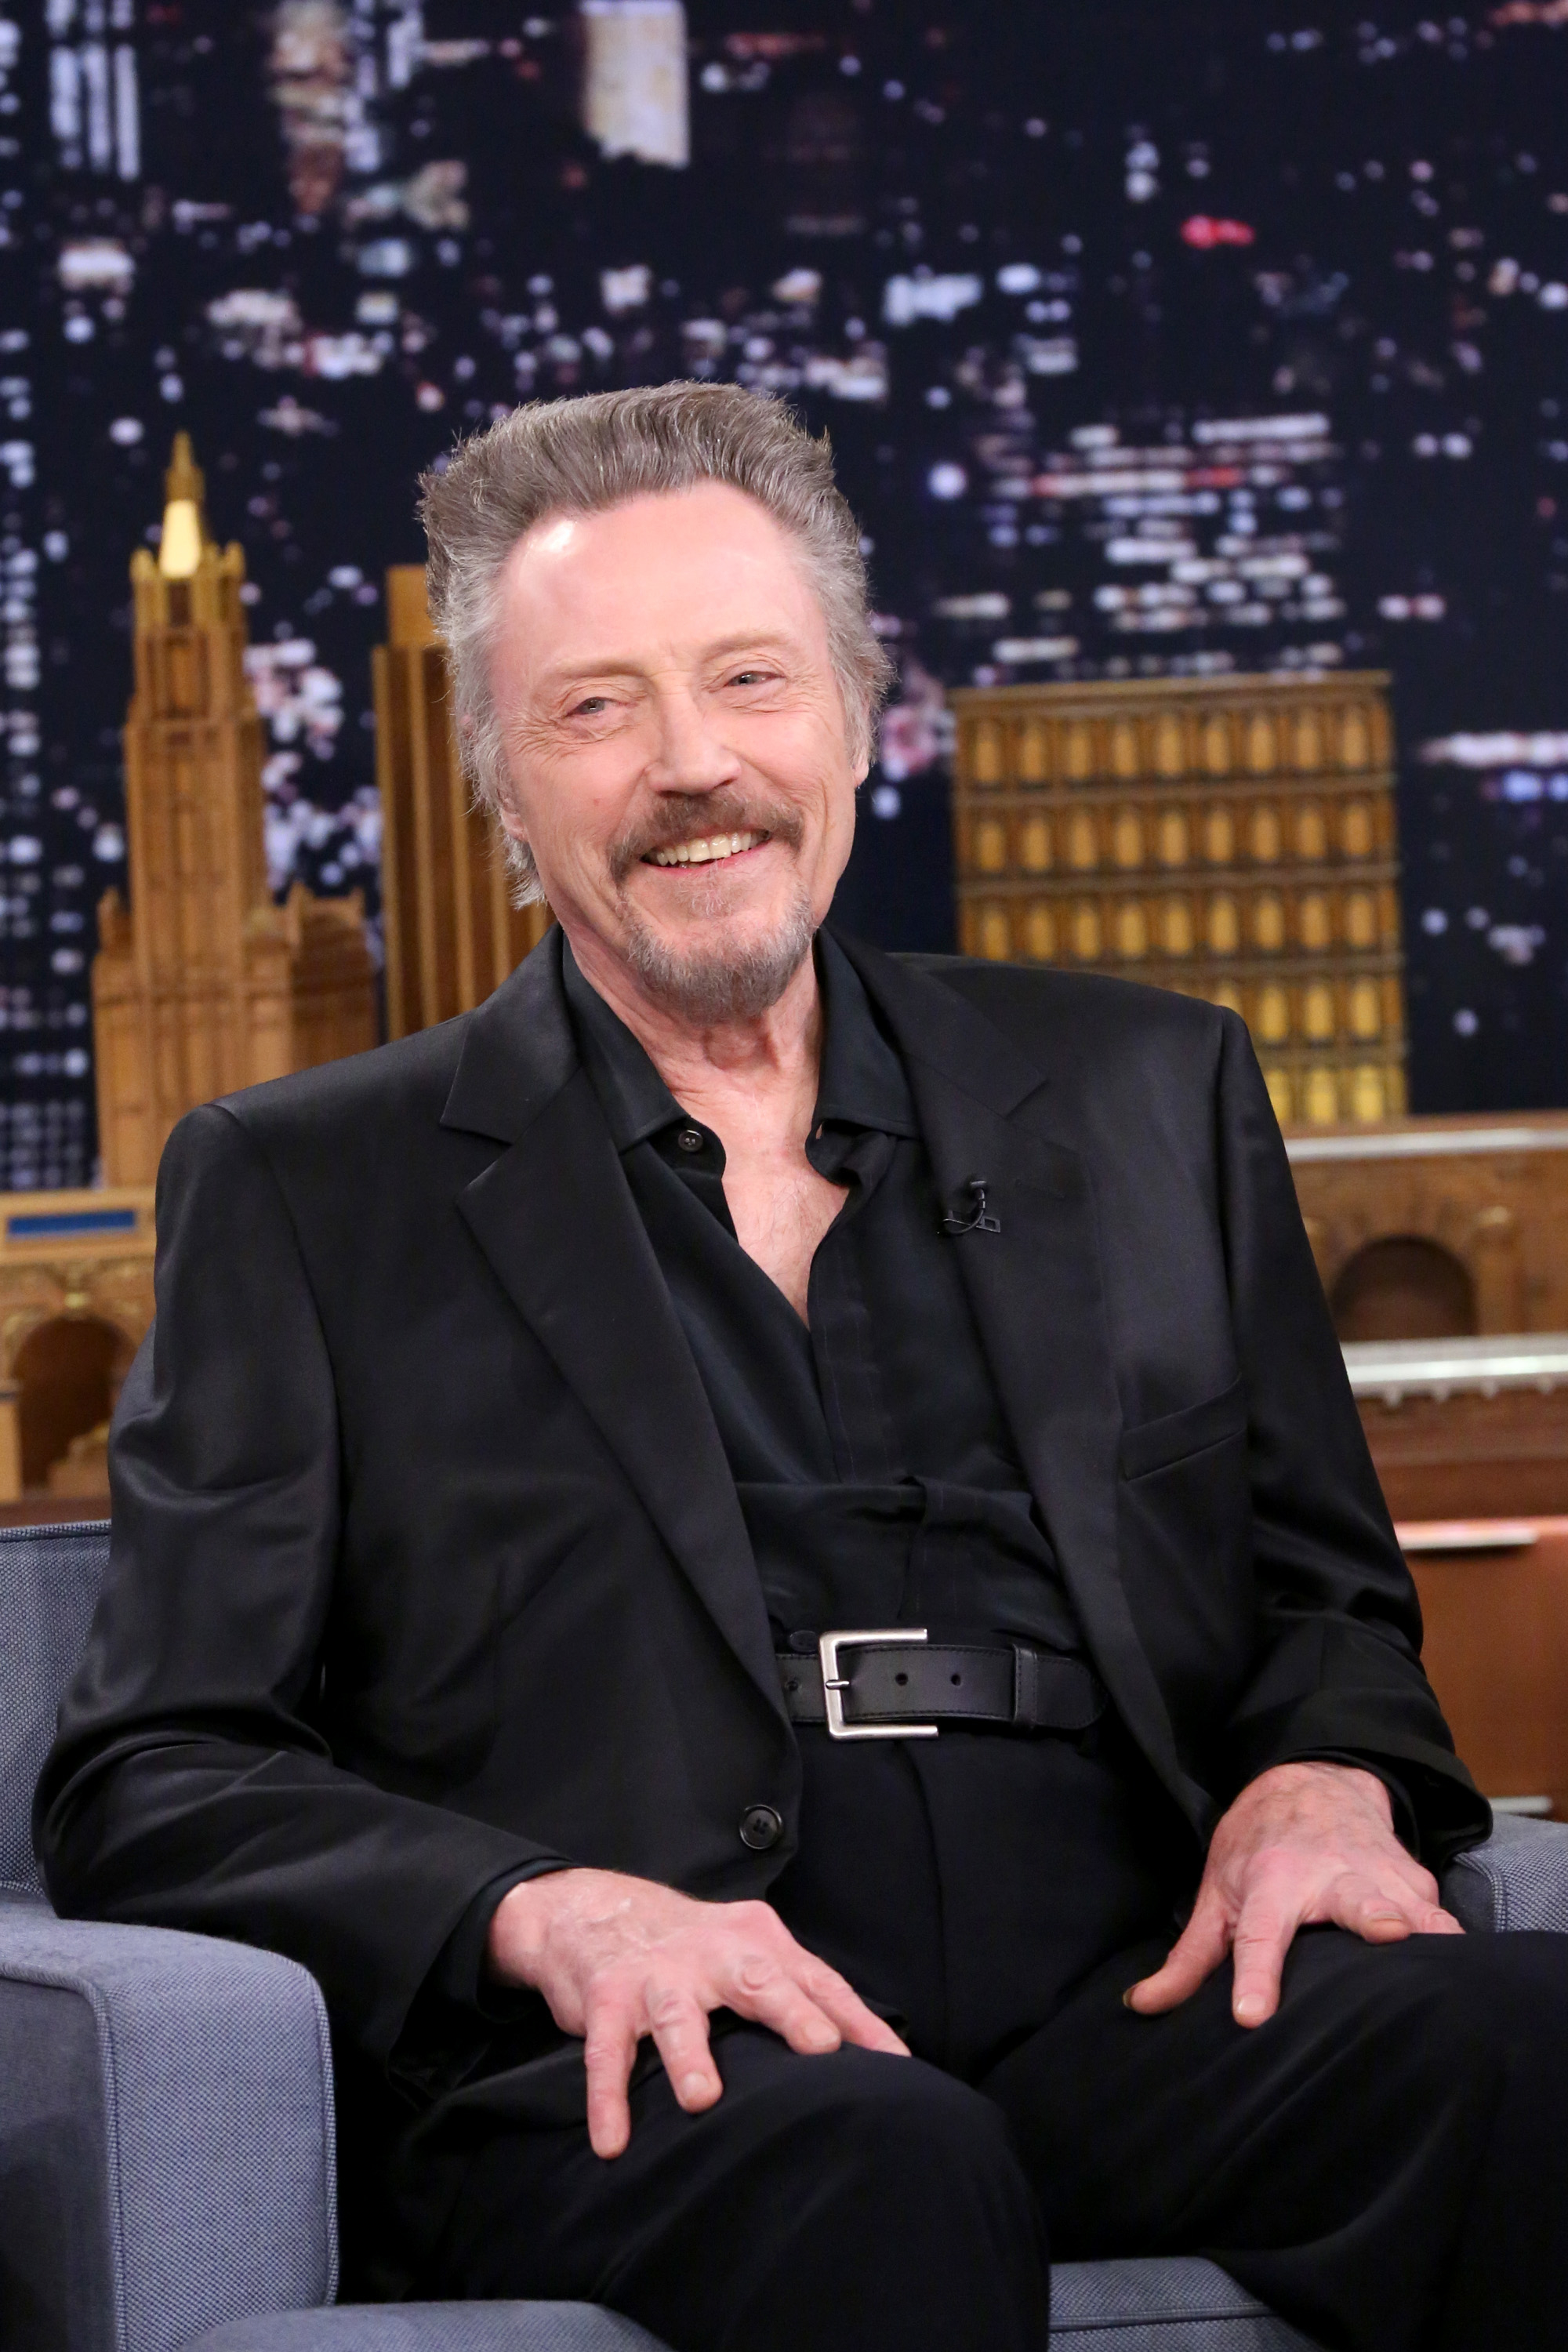 Man in black suit sitting, smiling on talk show set